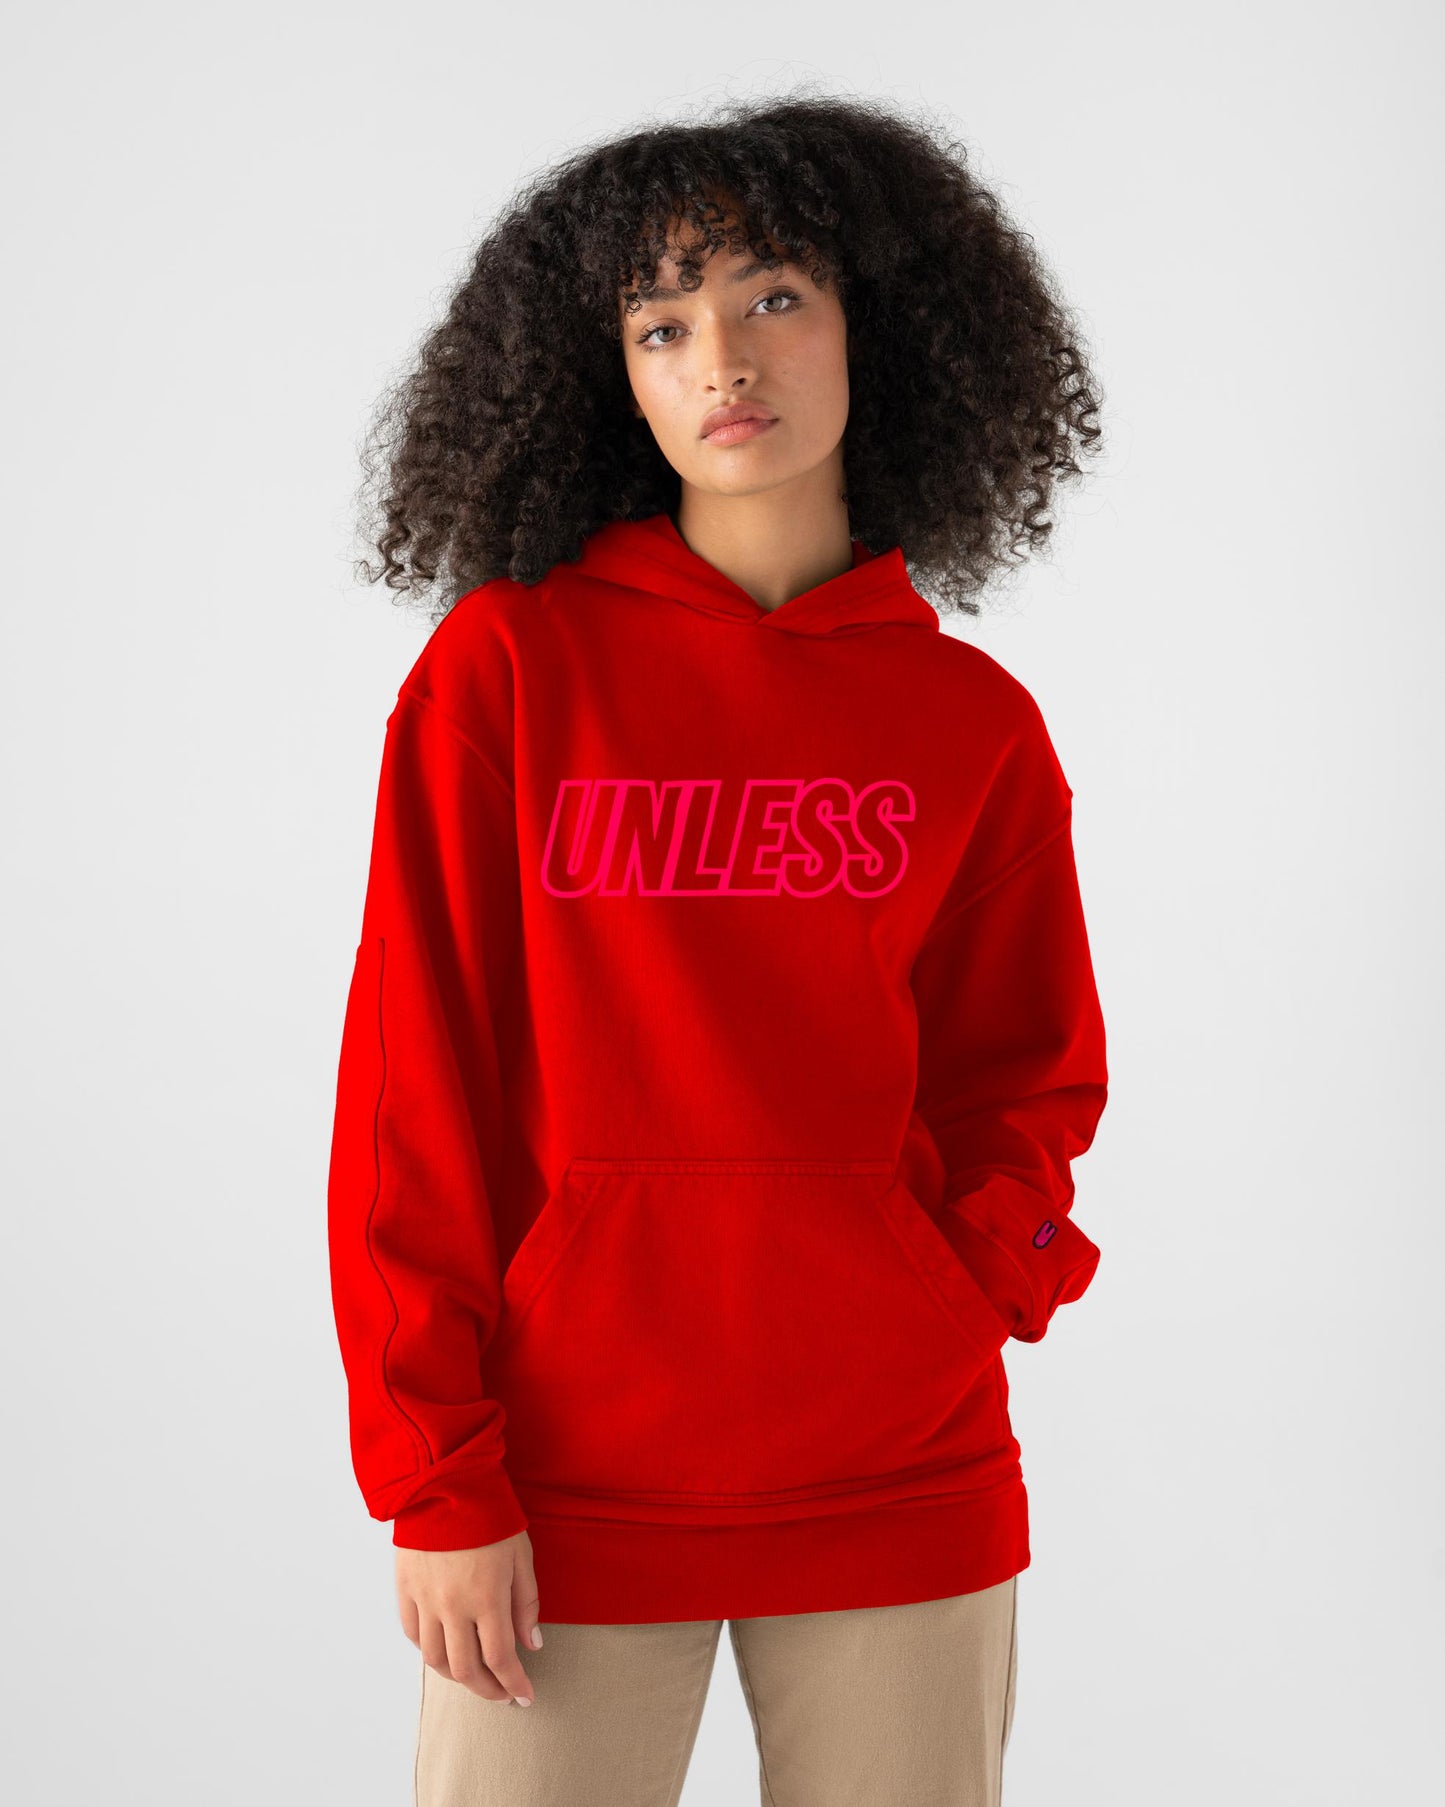 biodegradable "UNLESS" hoodie